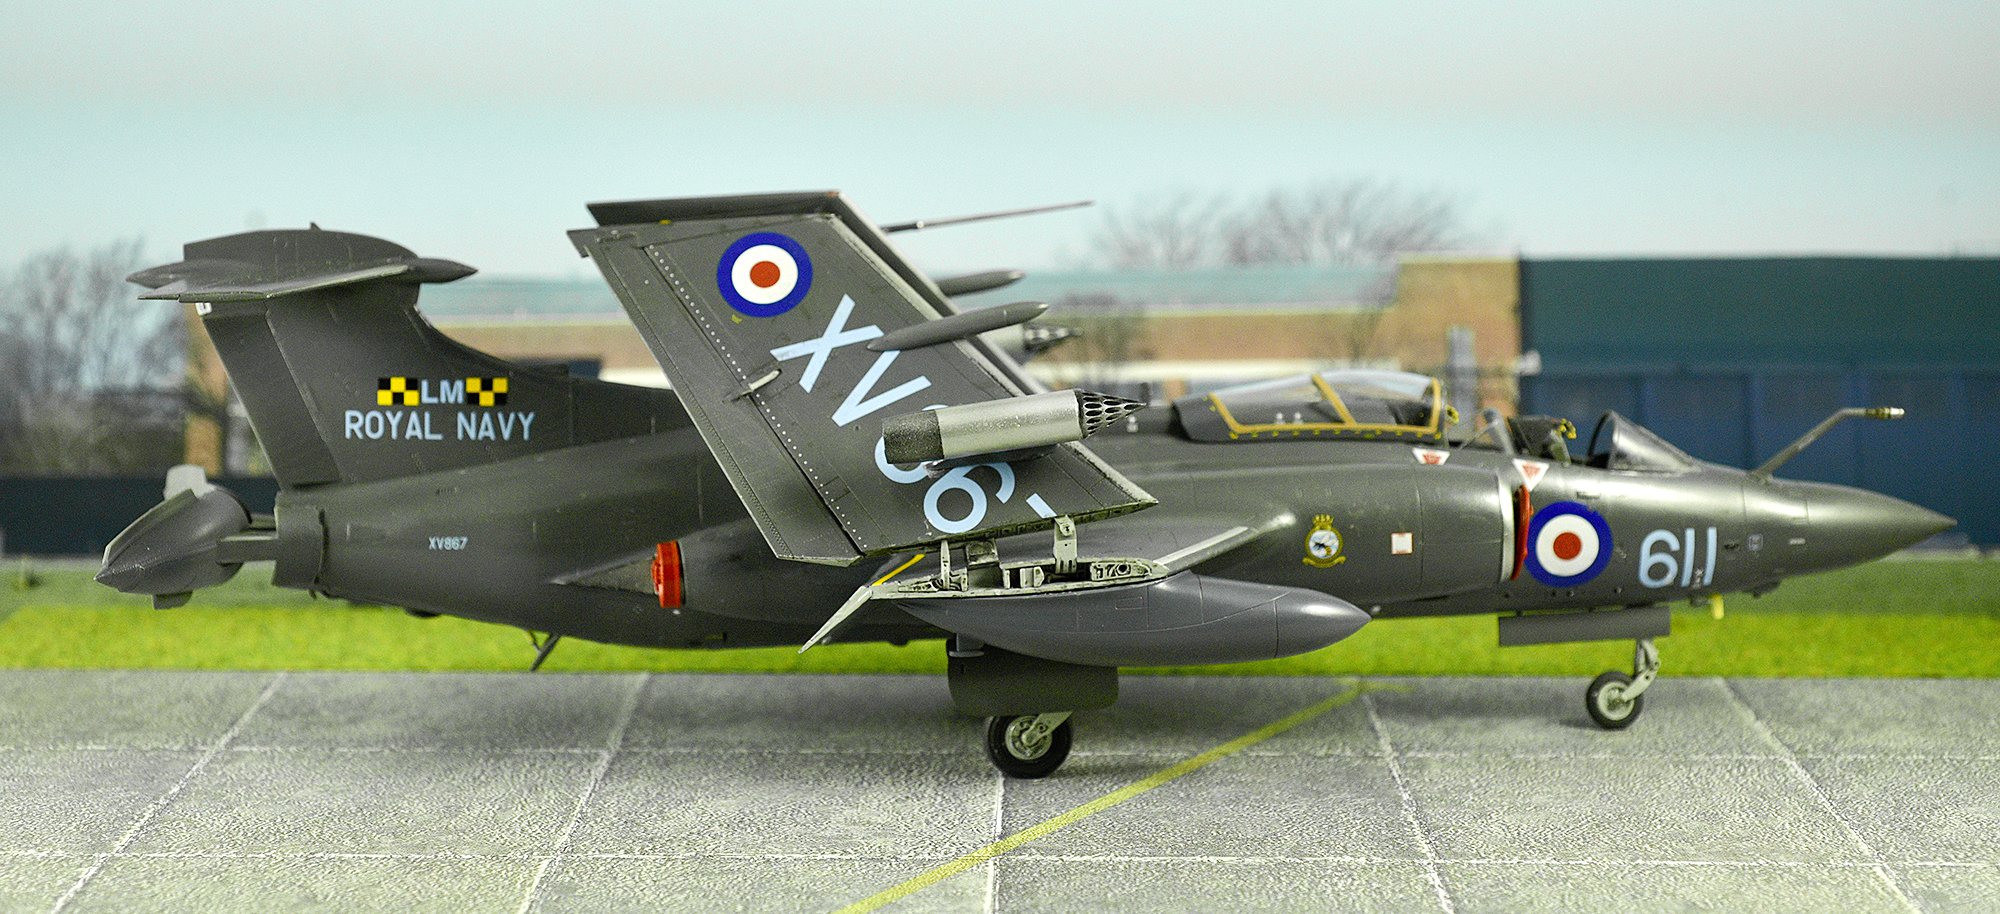 Blackburn Buccaneer S.2 by Stuart Mackay.